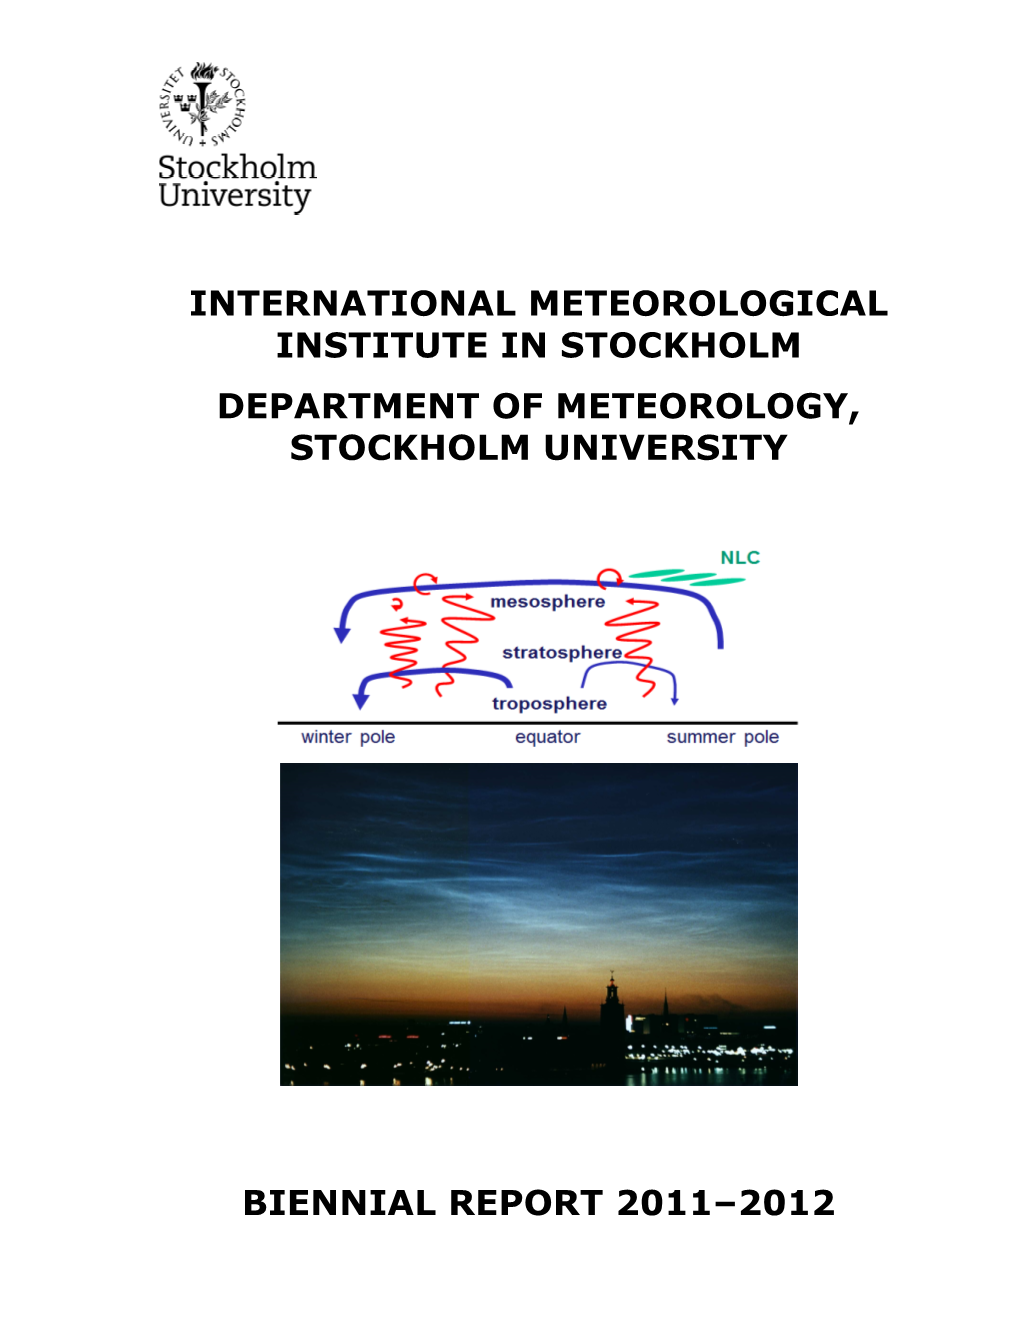 International Meteorological Institute in Stockholm Department of Meteorology, Stockholm University